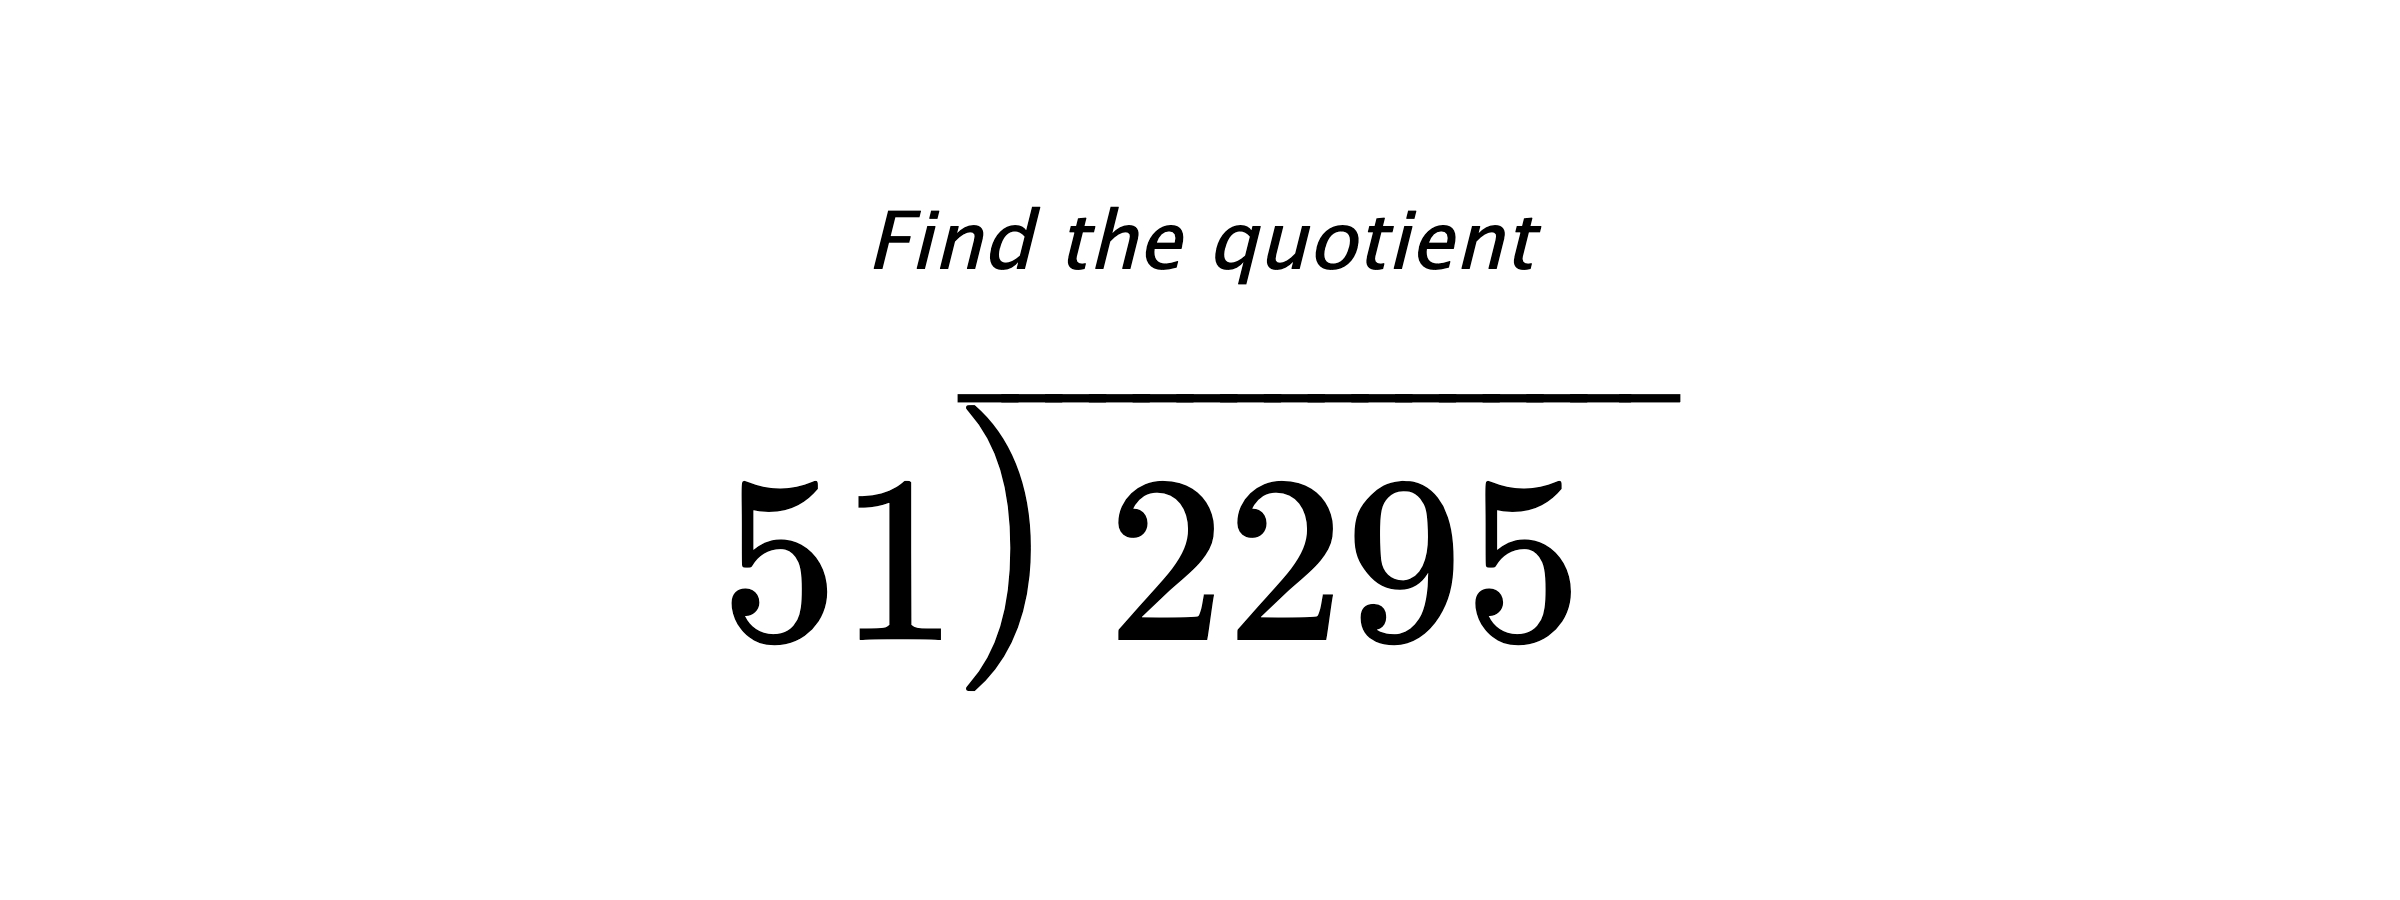 Find the quotient $ 51{\overline{\smash{\raise.3ex\hbox{$\big)$}}\,2295\phantom{)}}} $